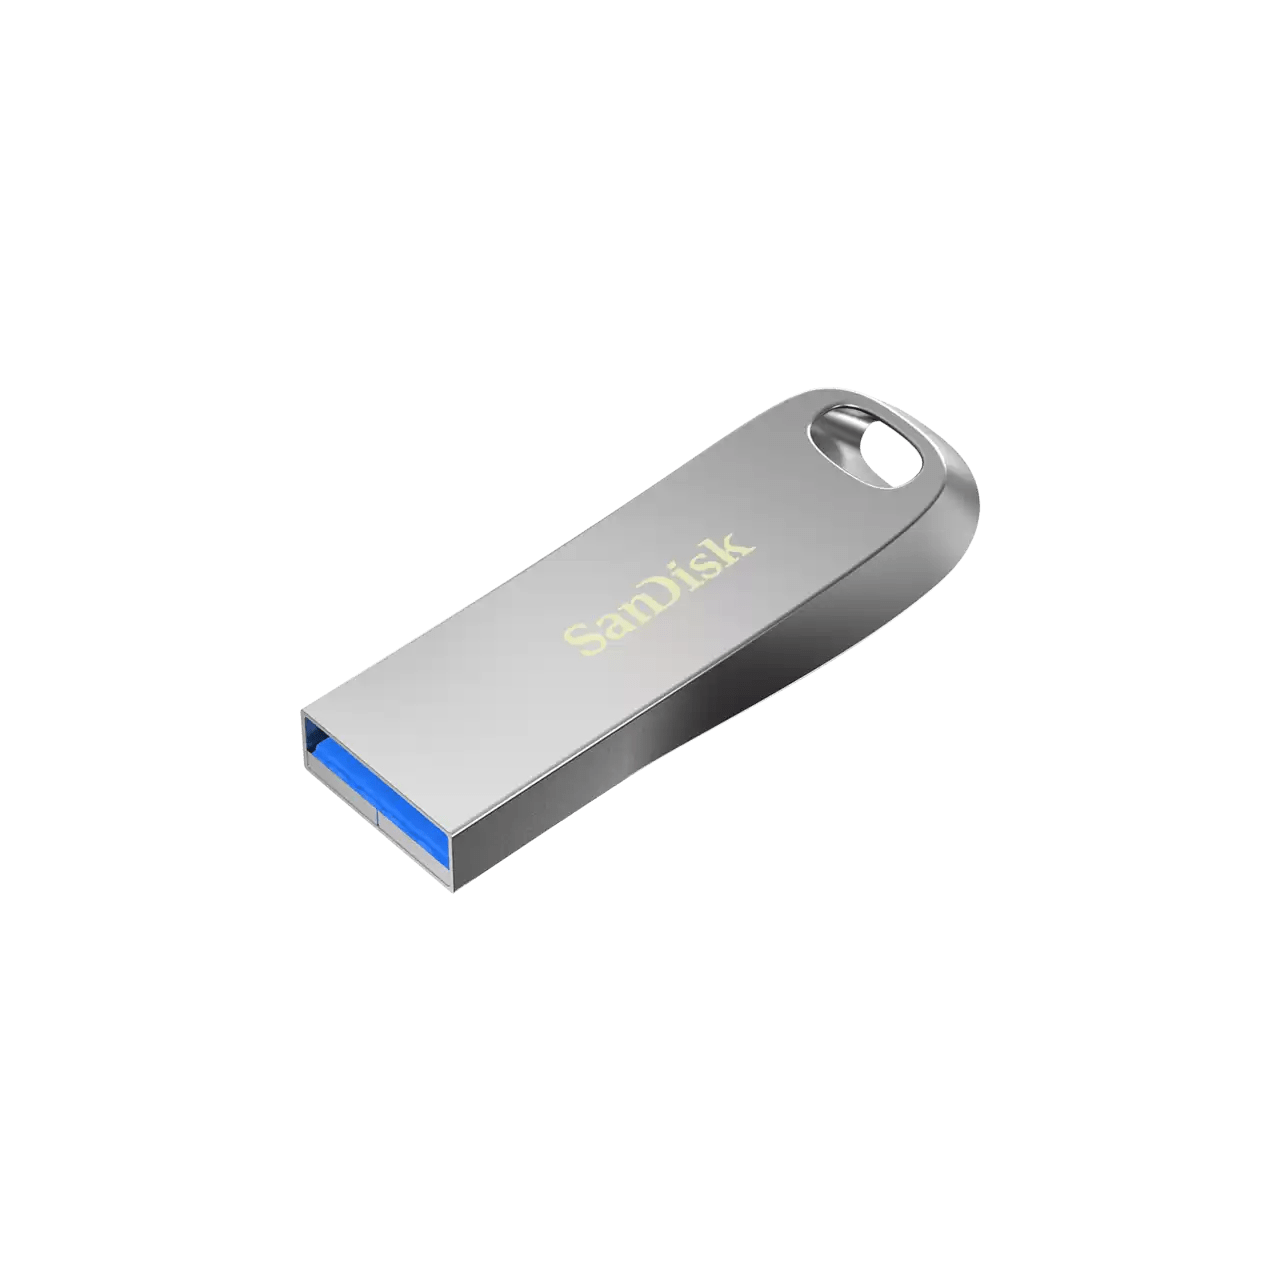 SanDisk 128GB Ultra Luxe USB 3.1 隨身碟 (SDCZ74 - 128G - G46) - Fever Electrics 電器熱網購平台